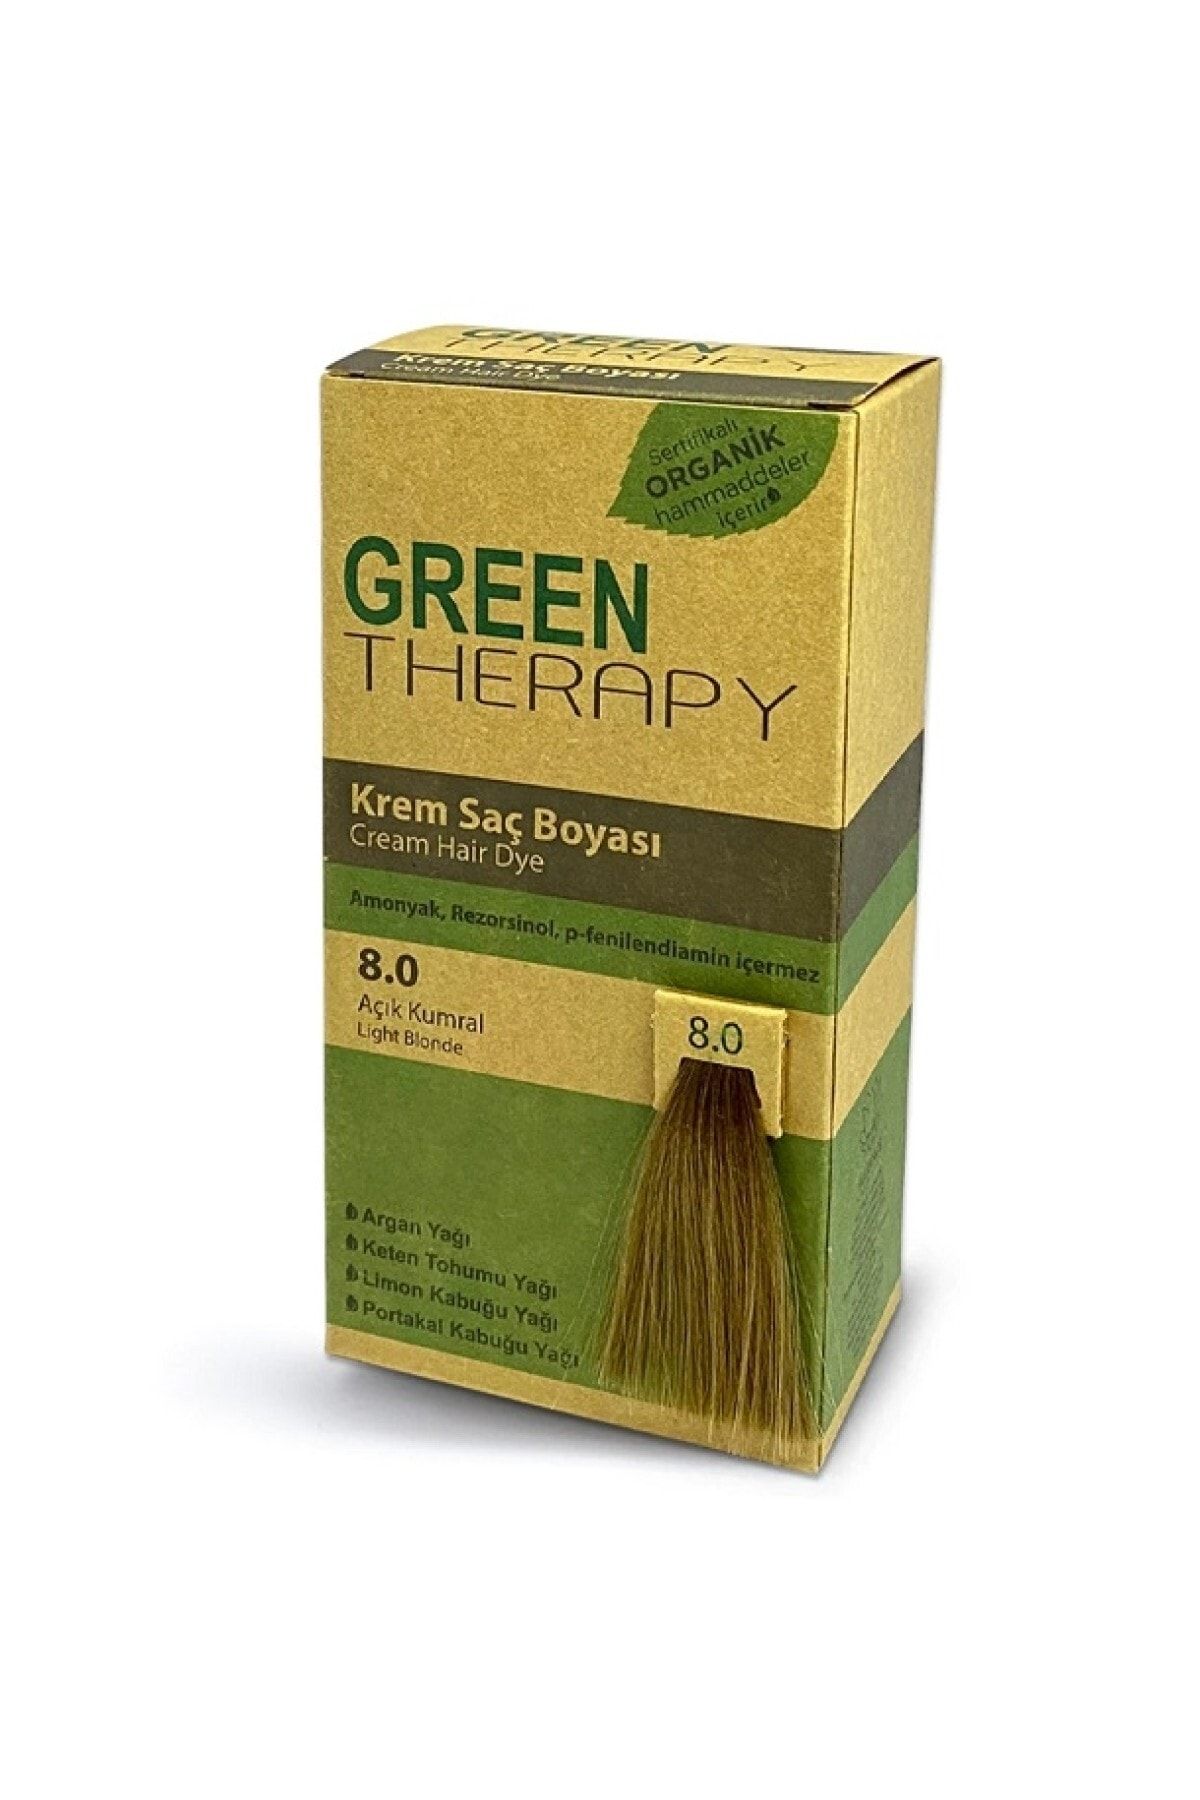 Green Therapy Krem Saç Boyası 8.0 Açık Kumral